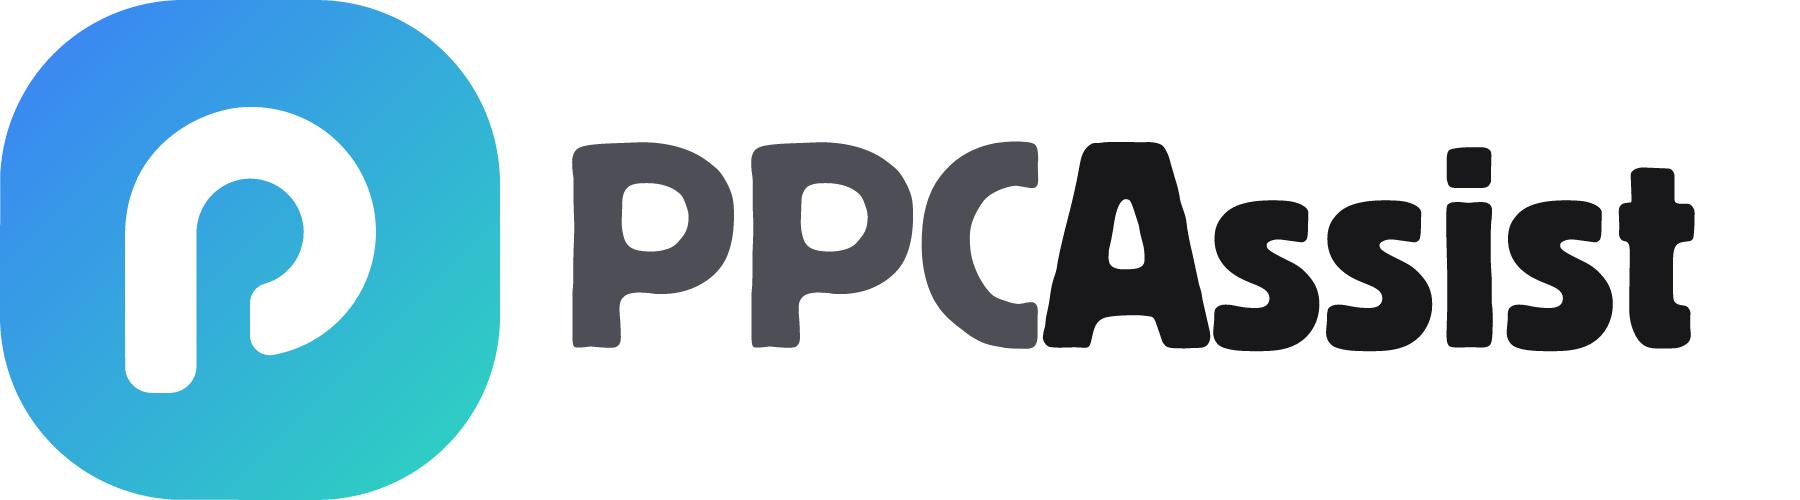 PPCAssist logo